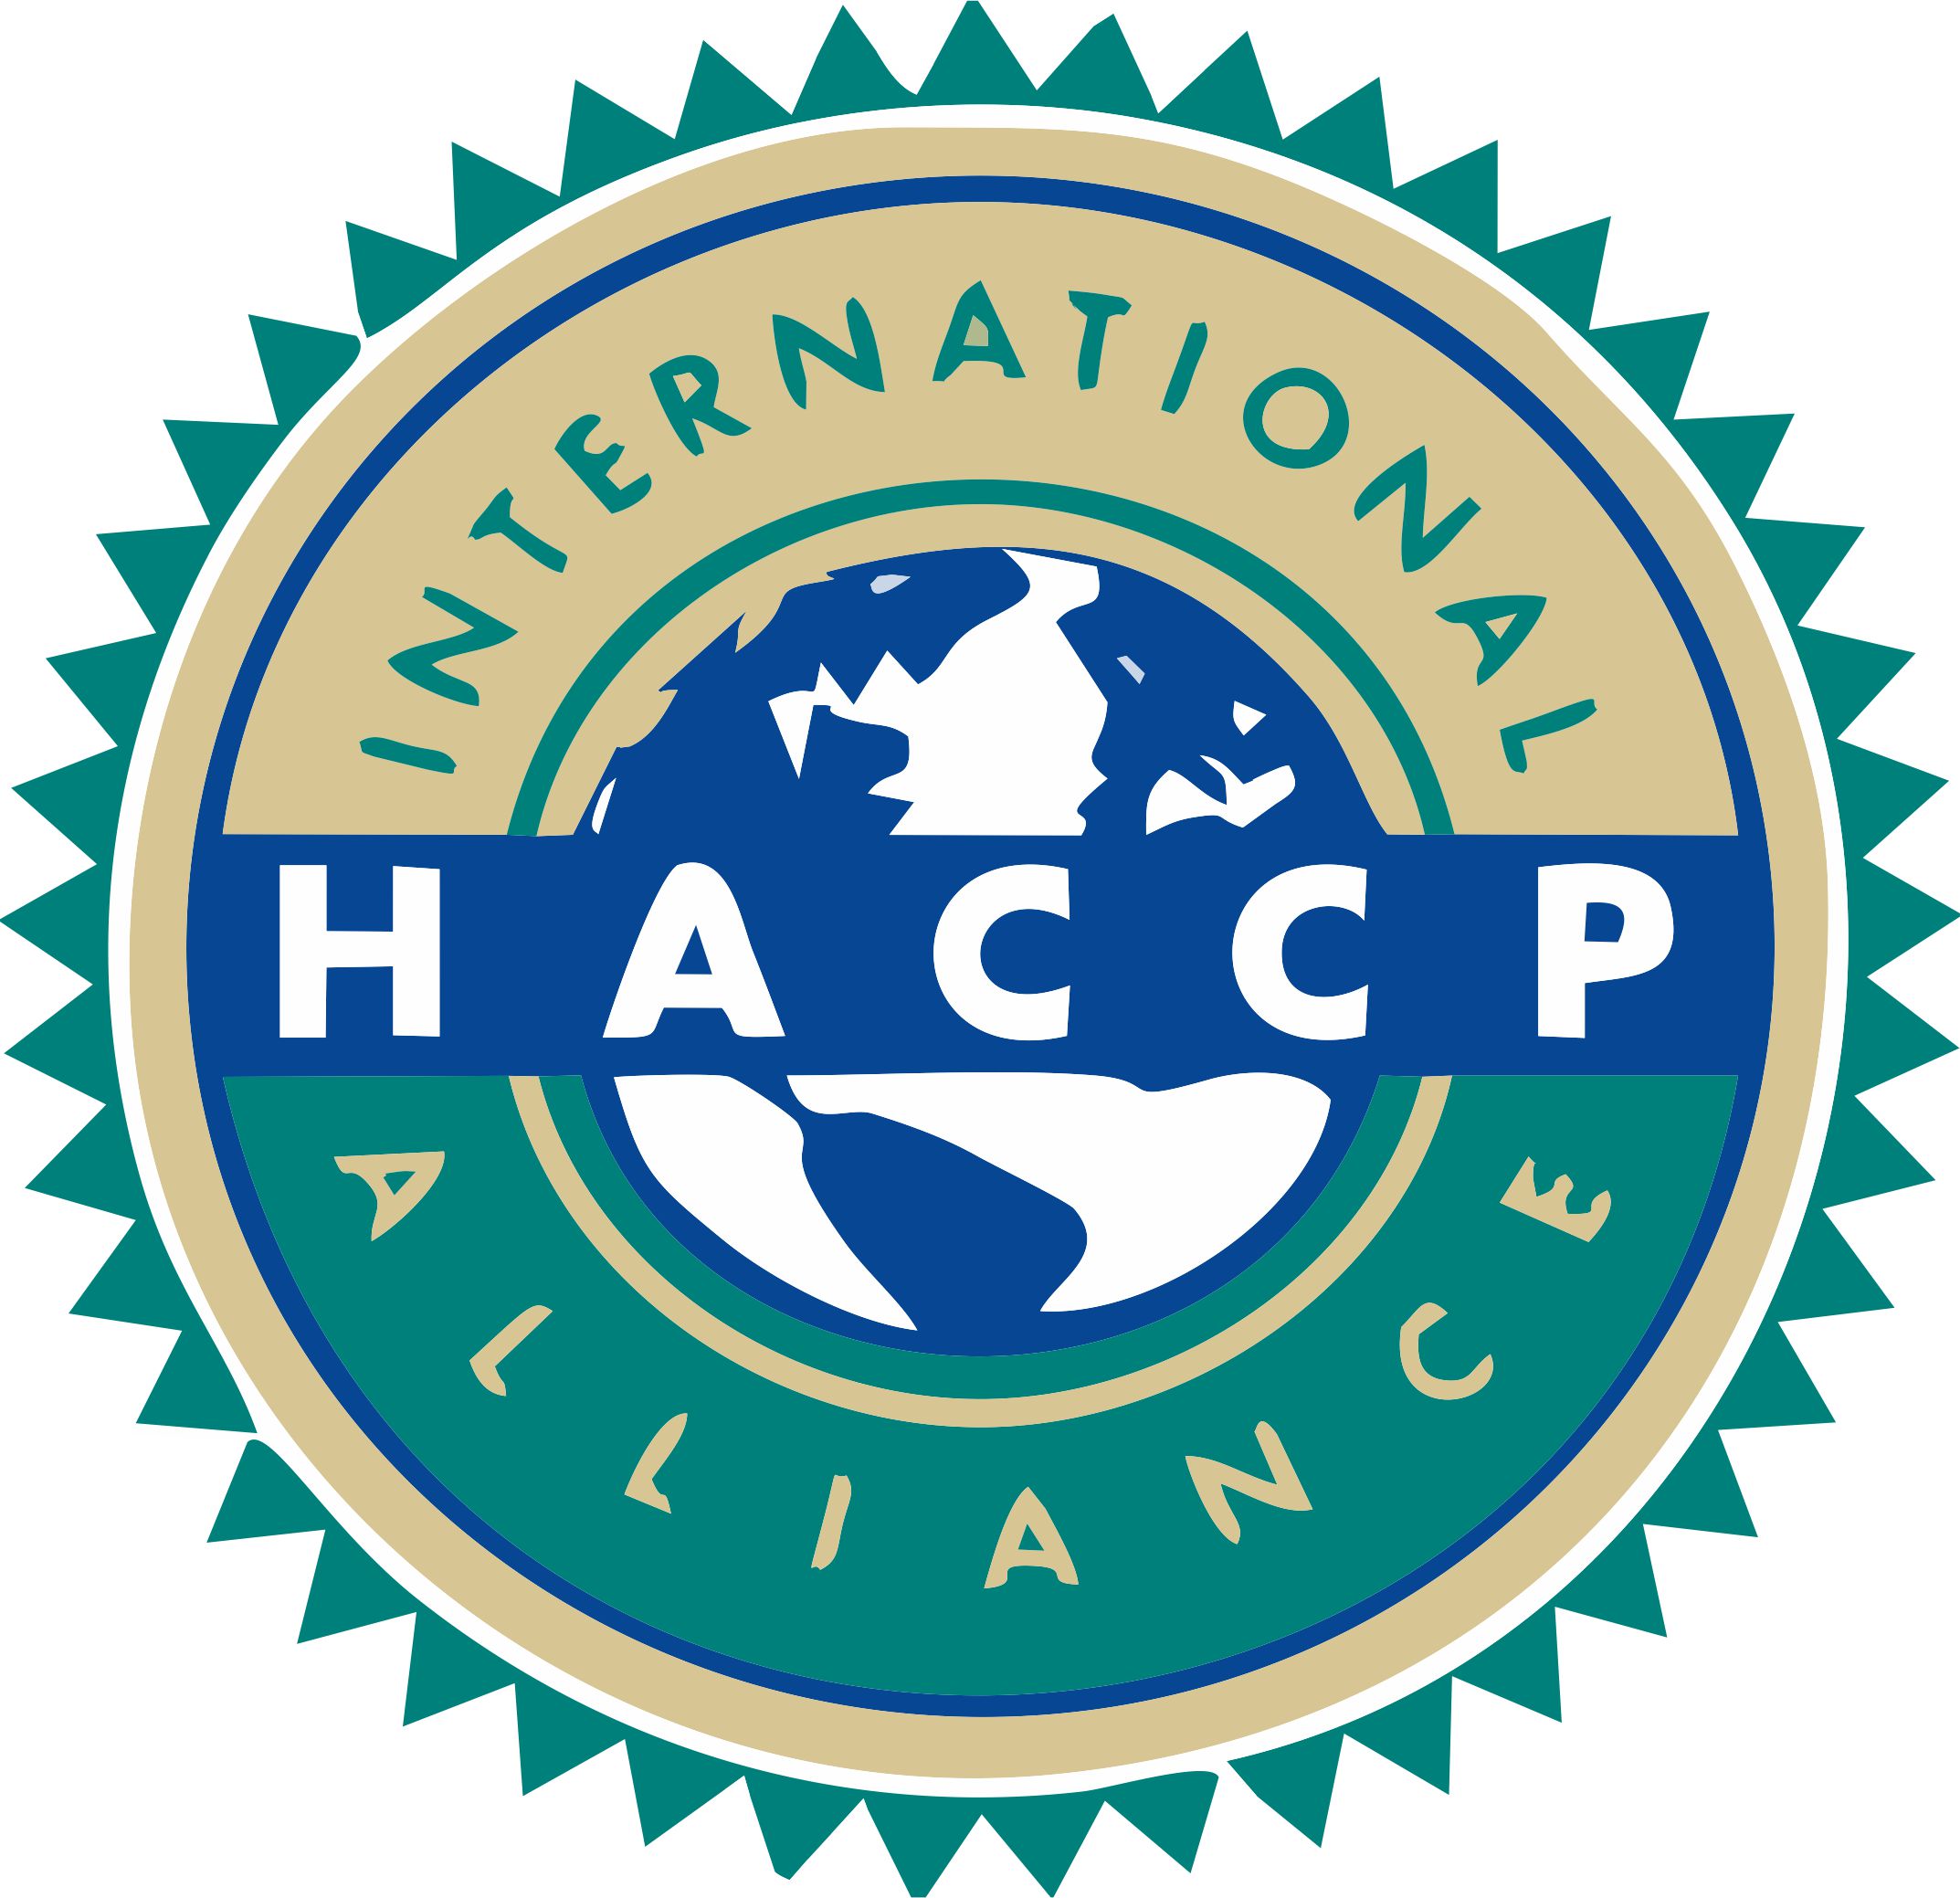 International HACCP Alliance